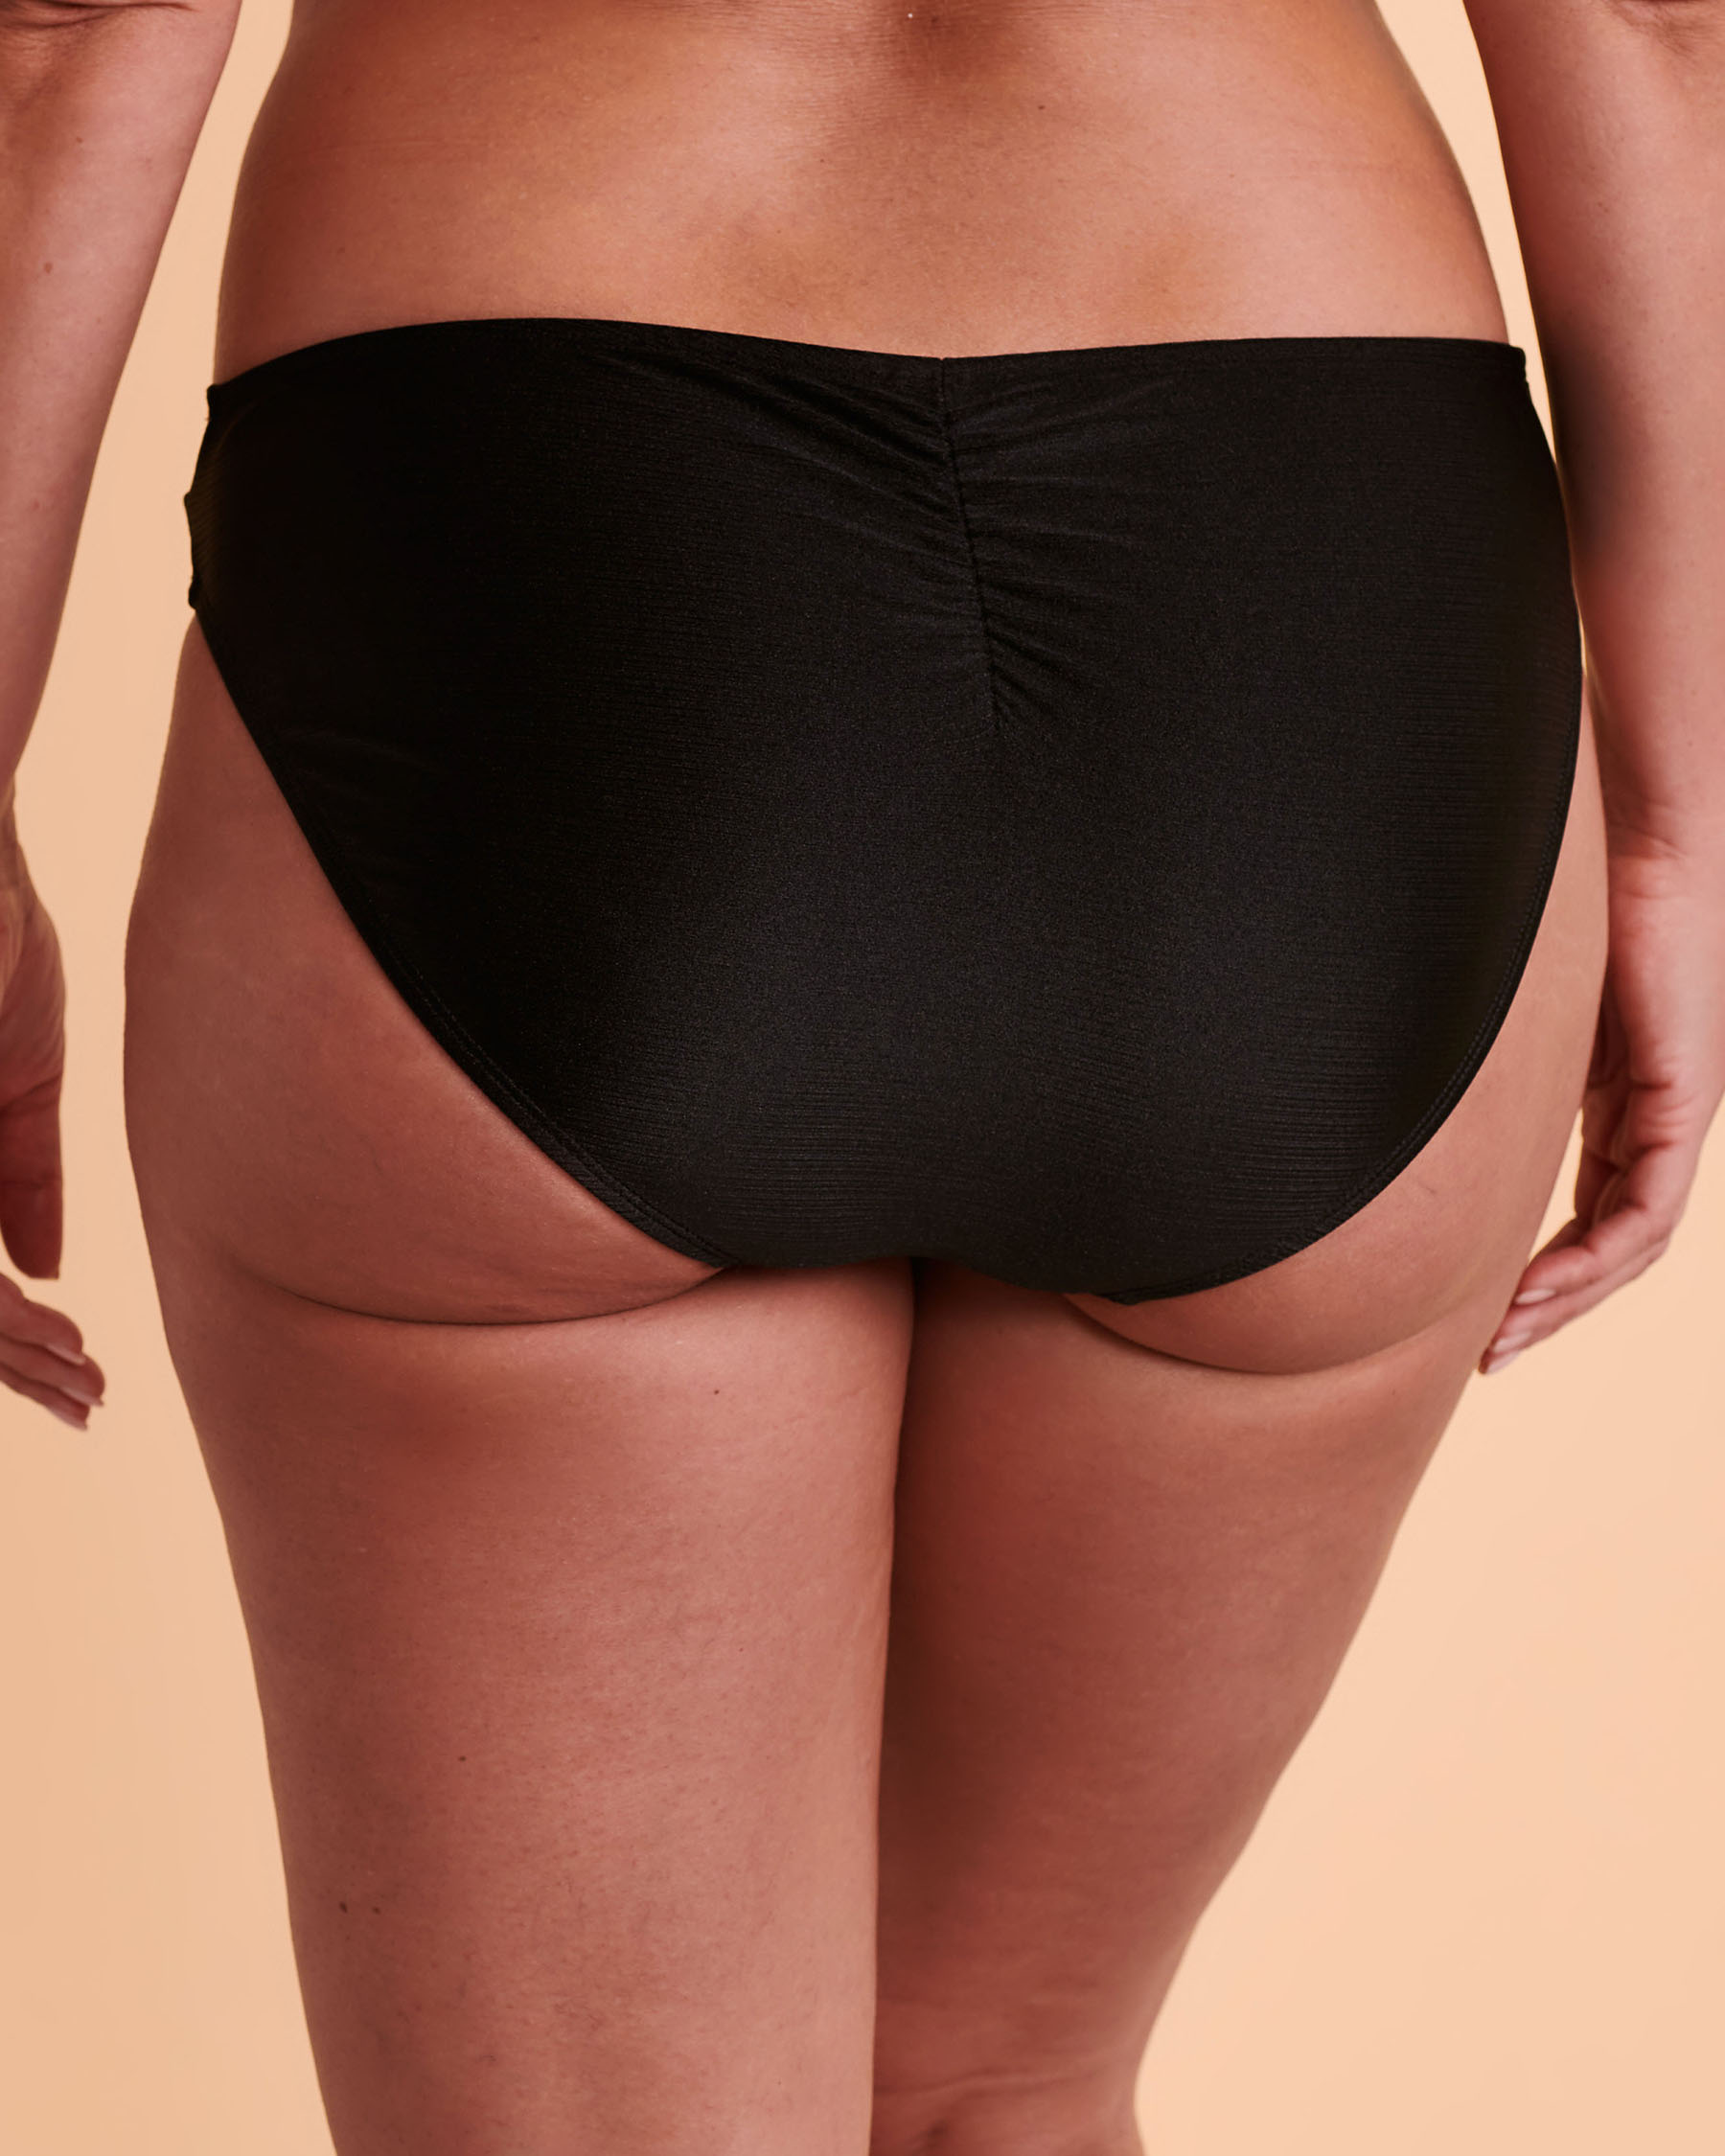 SANTEMARE SHINNY TEXTURED Twisted Waistband Bikini Bottom Black 01300151 - View3